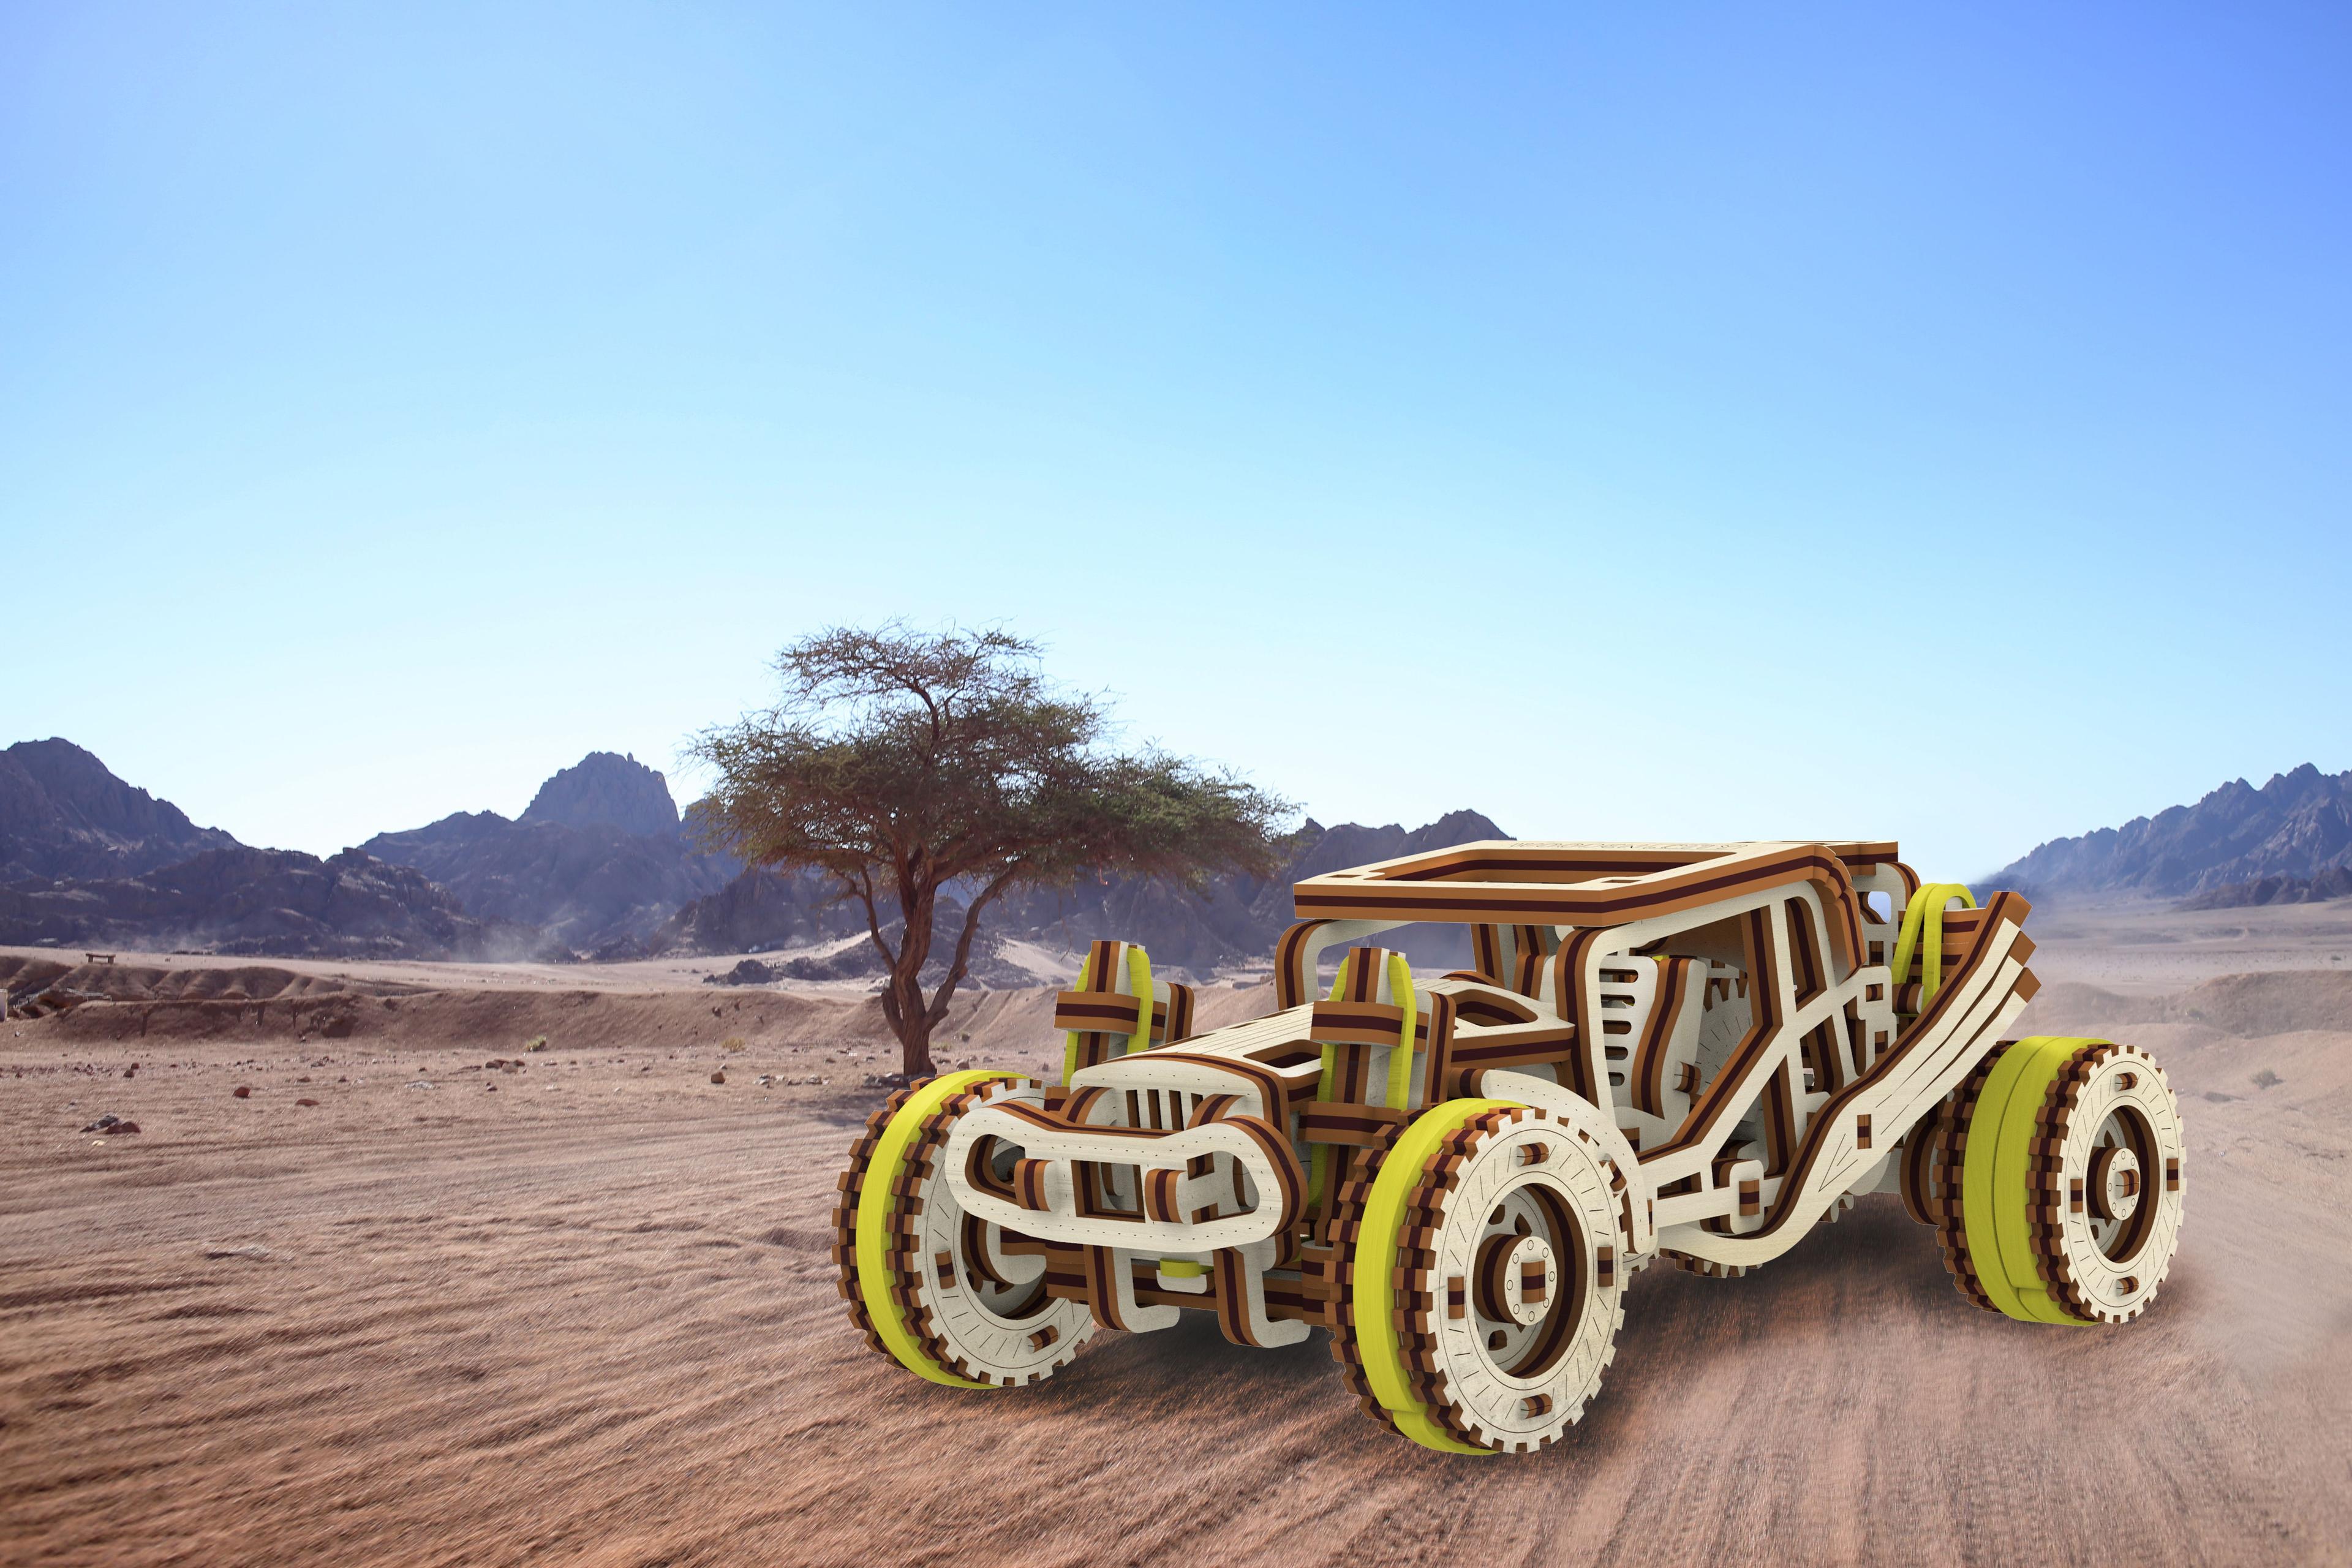 Wooden 3D Puzzle - Car Buggy